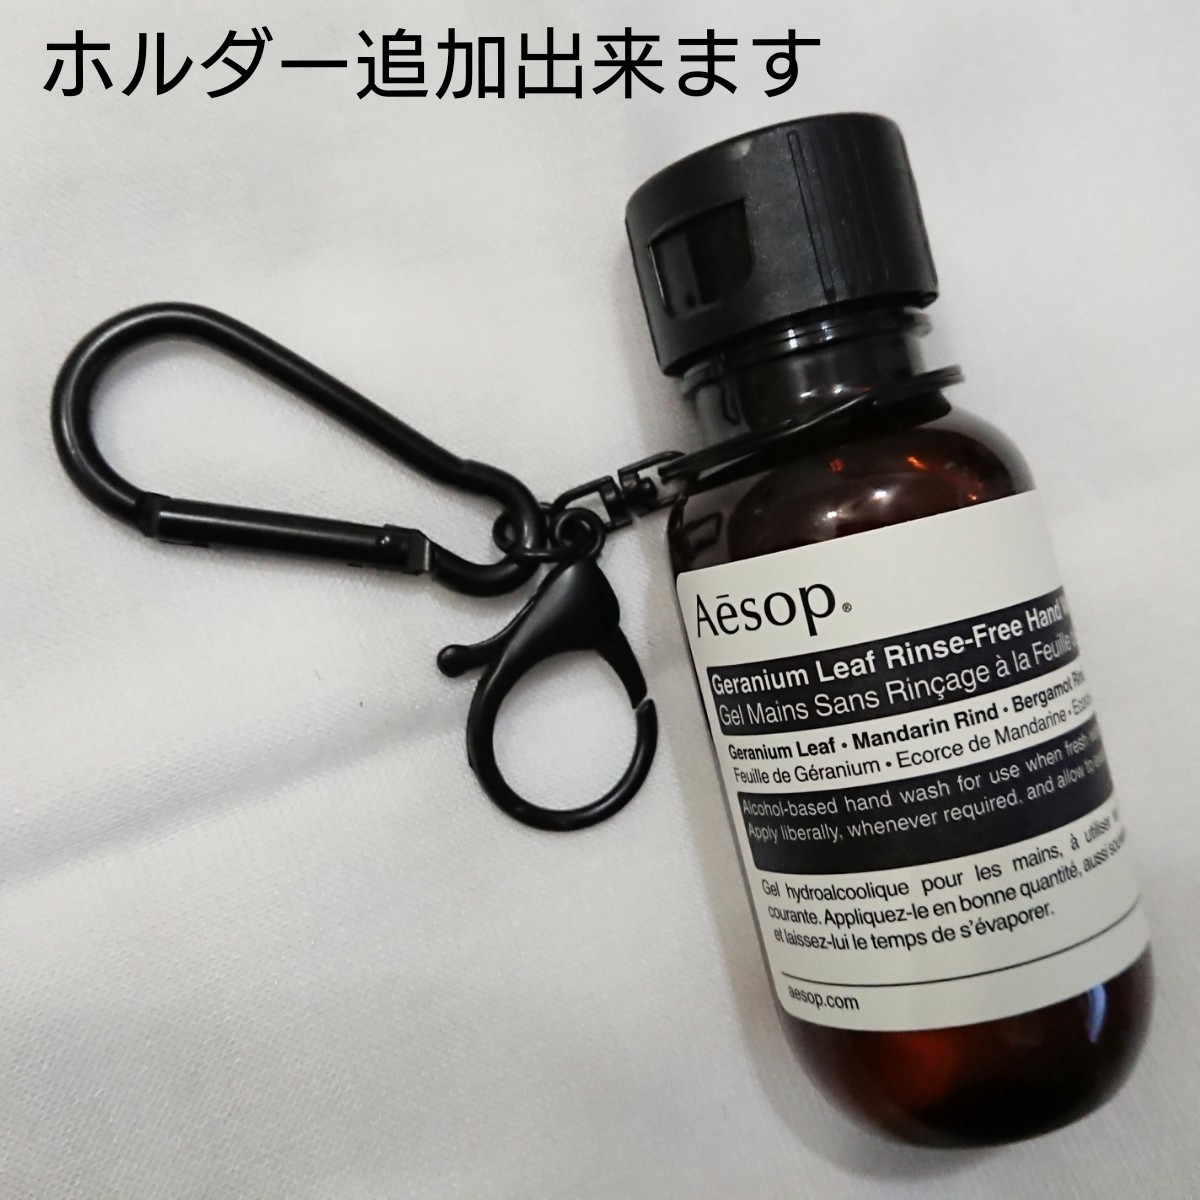 50ml 2本 ゼラニウム リンスフリー イソップ Aesop リフレッシュ 気分転換 アロマ 精油 日本未発売